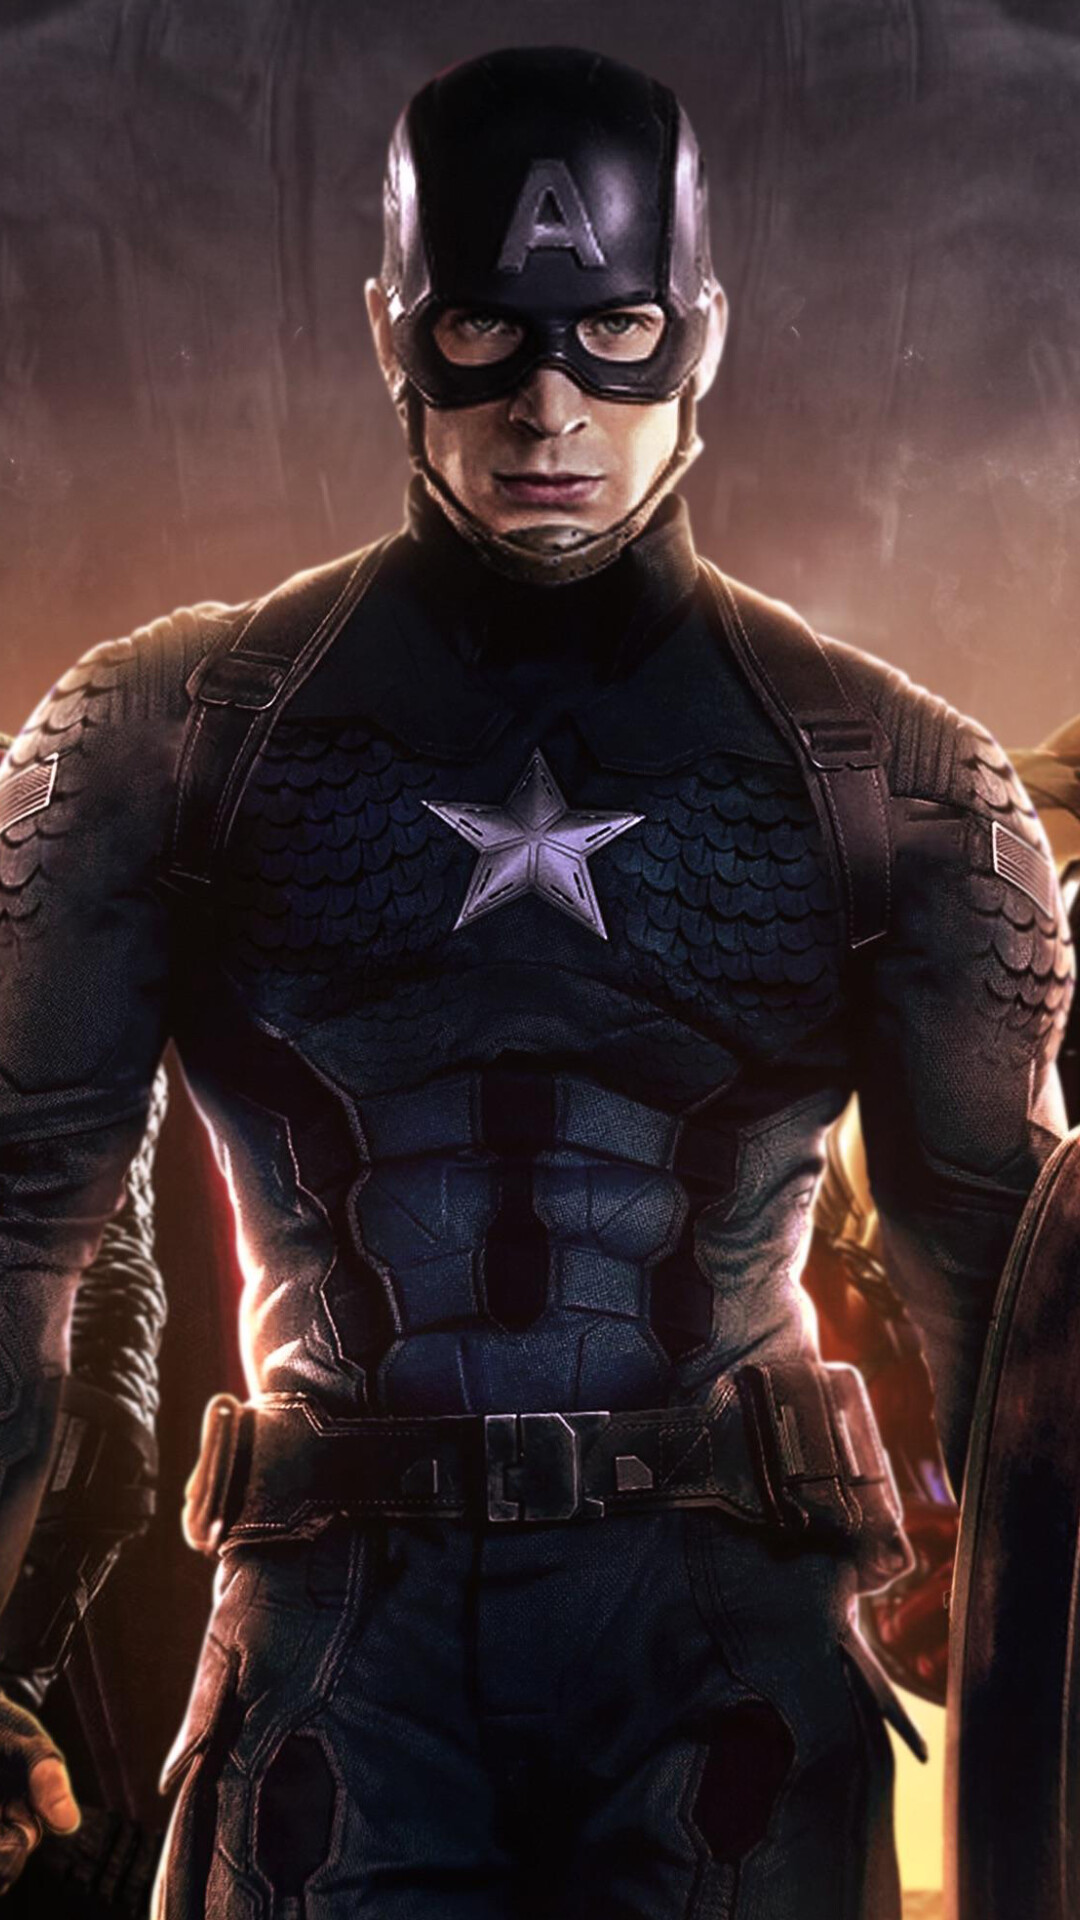 Avengers: Captain America, a comic-strip superhero created by writer Joe Simon and artist Jack Kirby. 1080x1920 Full HD Wallpaper.